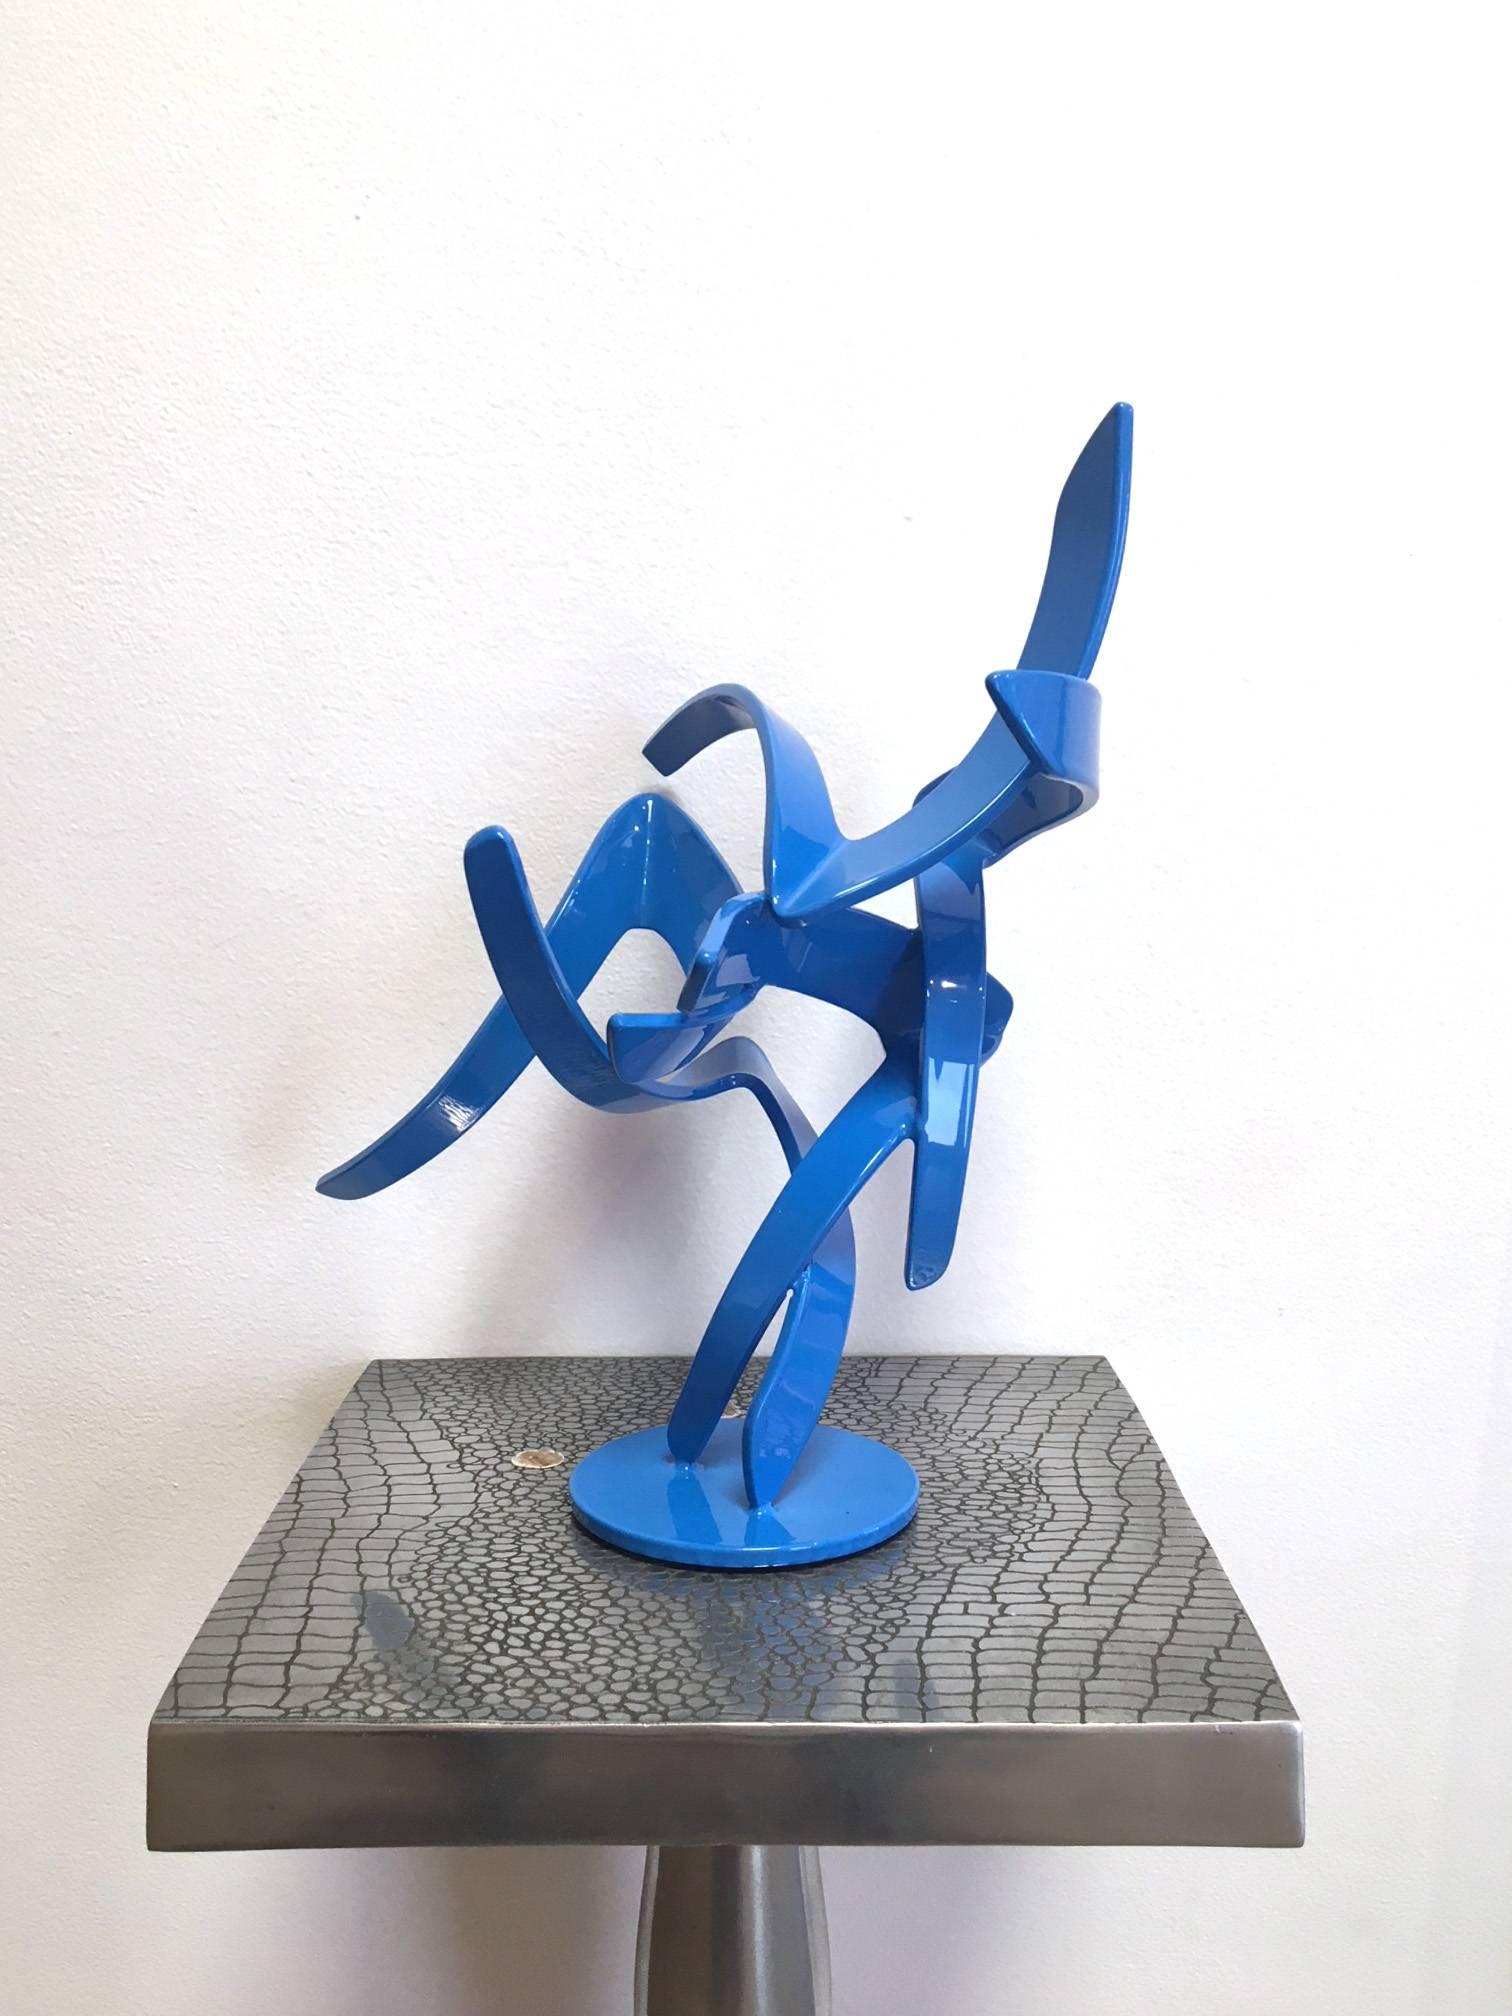 Matt Devine 
Studio Study 18-25
Abstract Steel Sculpture with Blue Powdercoat (Freestanding Sculpture)
13 x 10 x 9 in
$2,200.00

Matt Devine is a self-taught sculptor working with steel, aluminum and bronze. Born and raised in Salem, Massachusetts